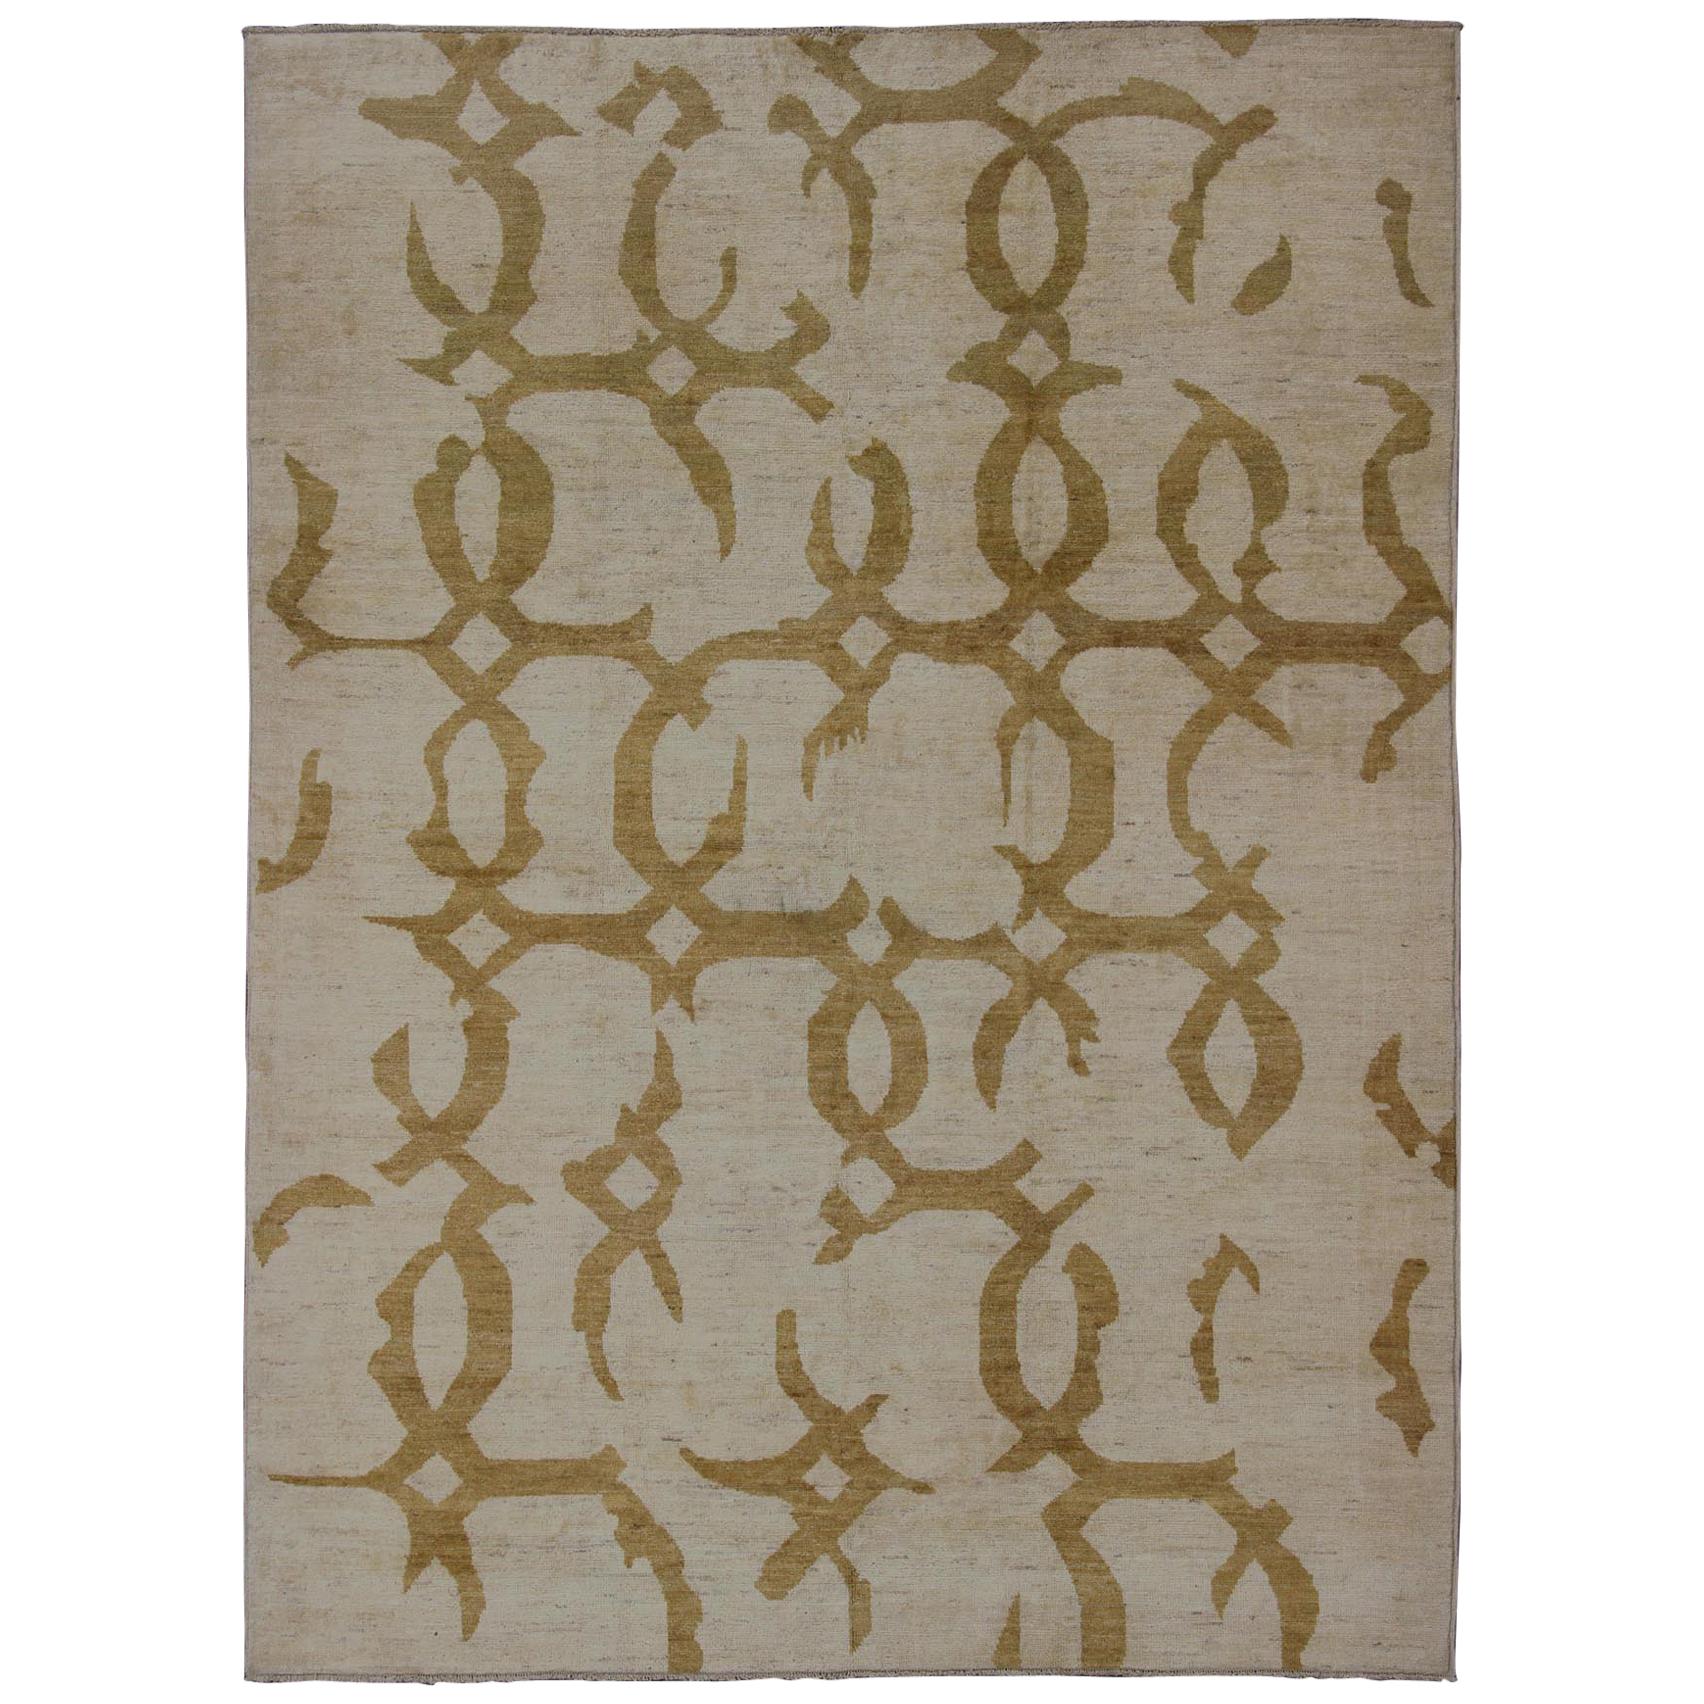 Keivan Woven Arts Großer moderner Teppich mit abstraktem Muster